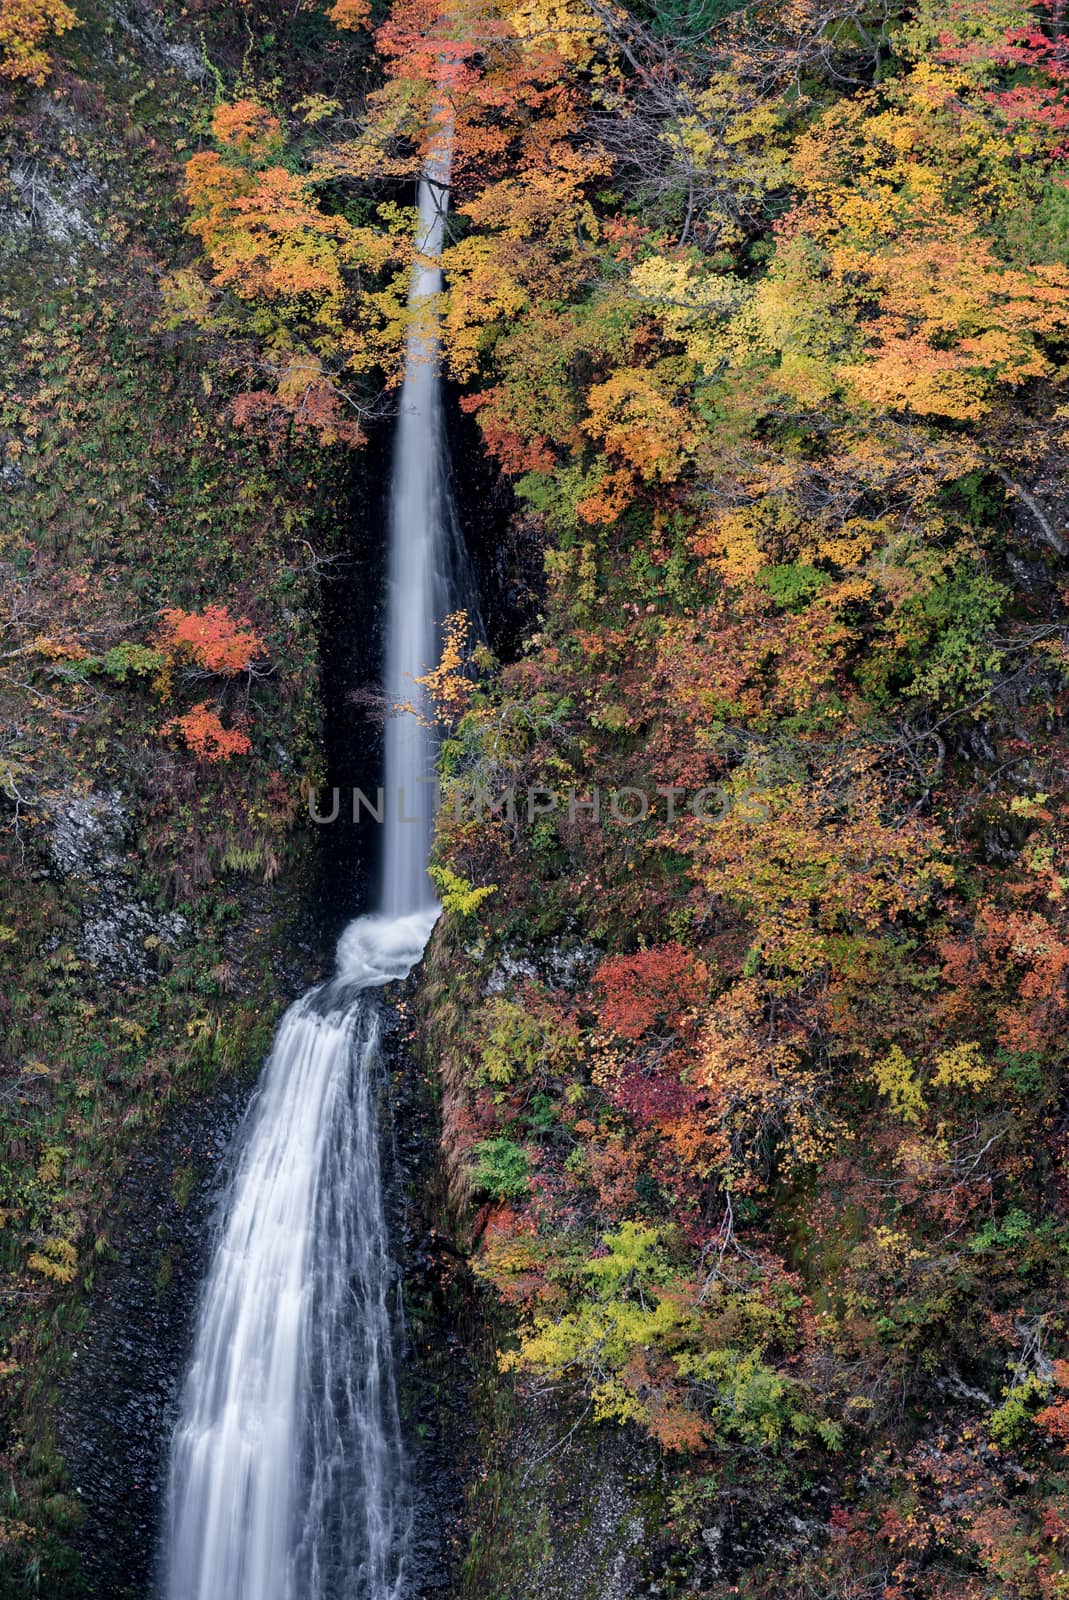 Tsumijikura Taki waterfall in autumn Fall season at Fukushima Japan